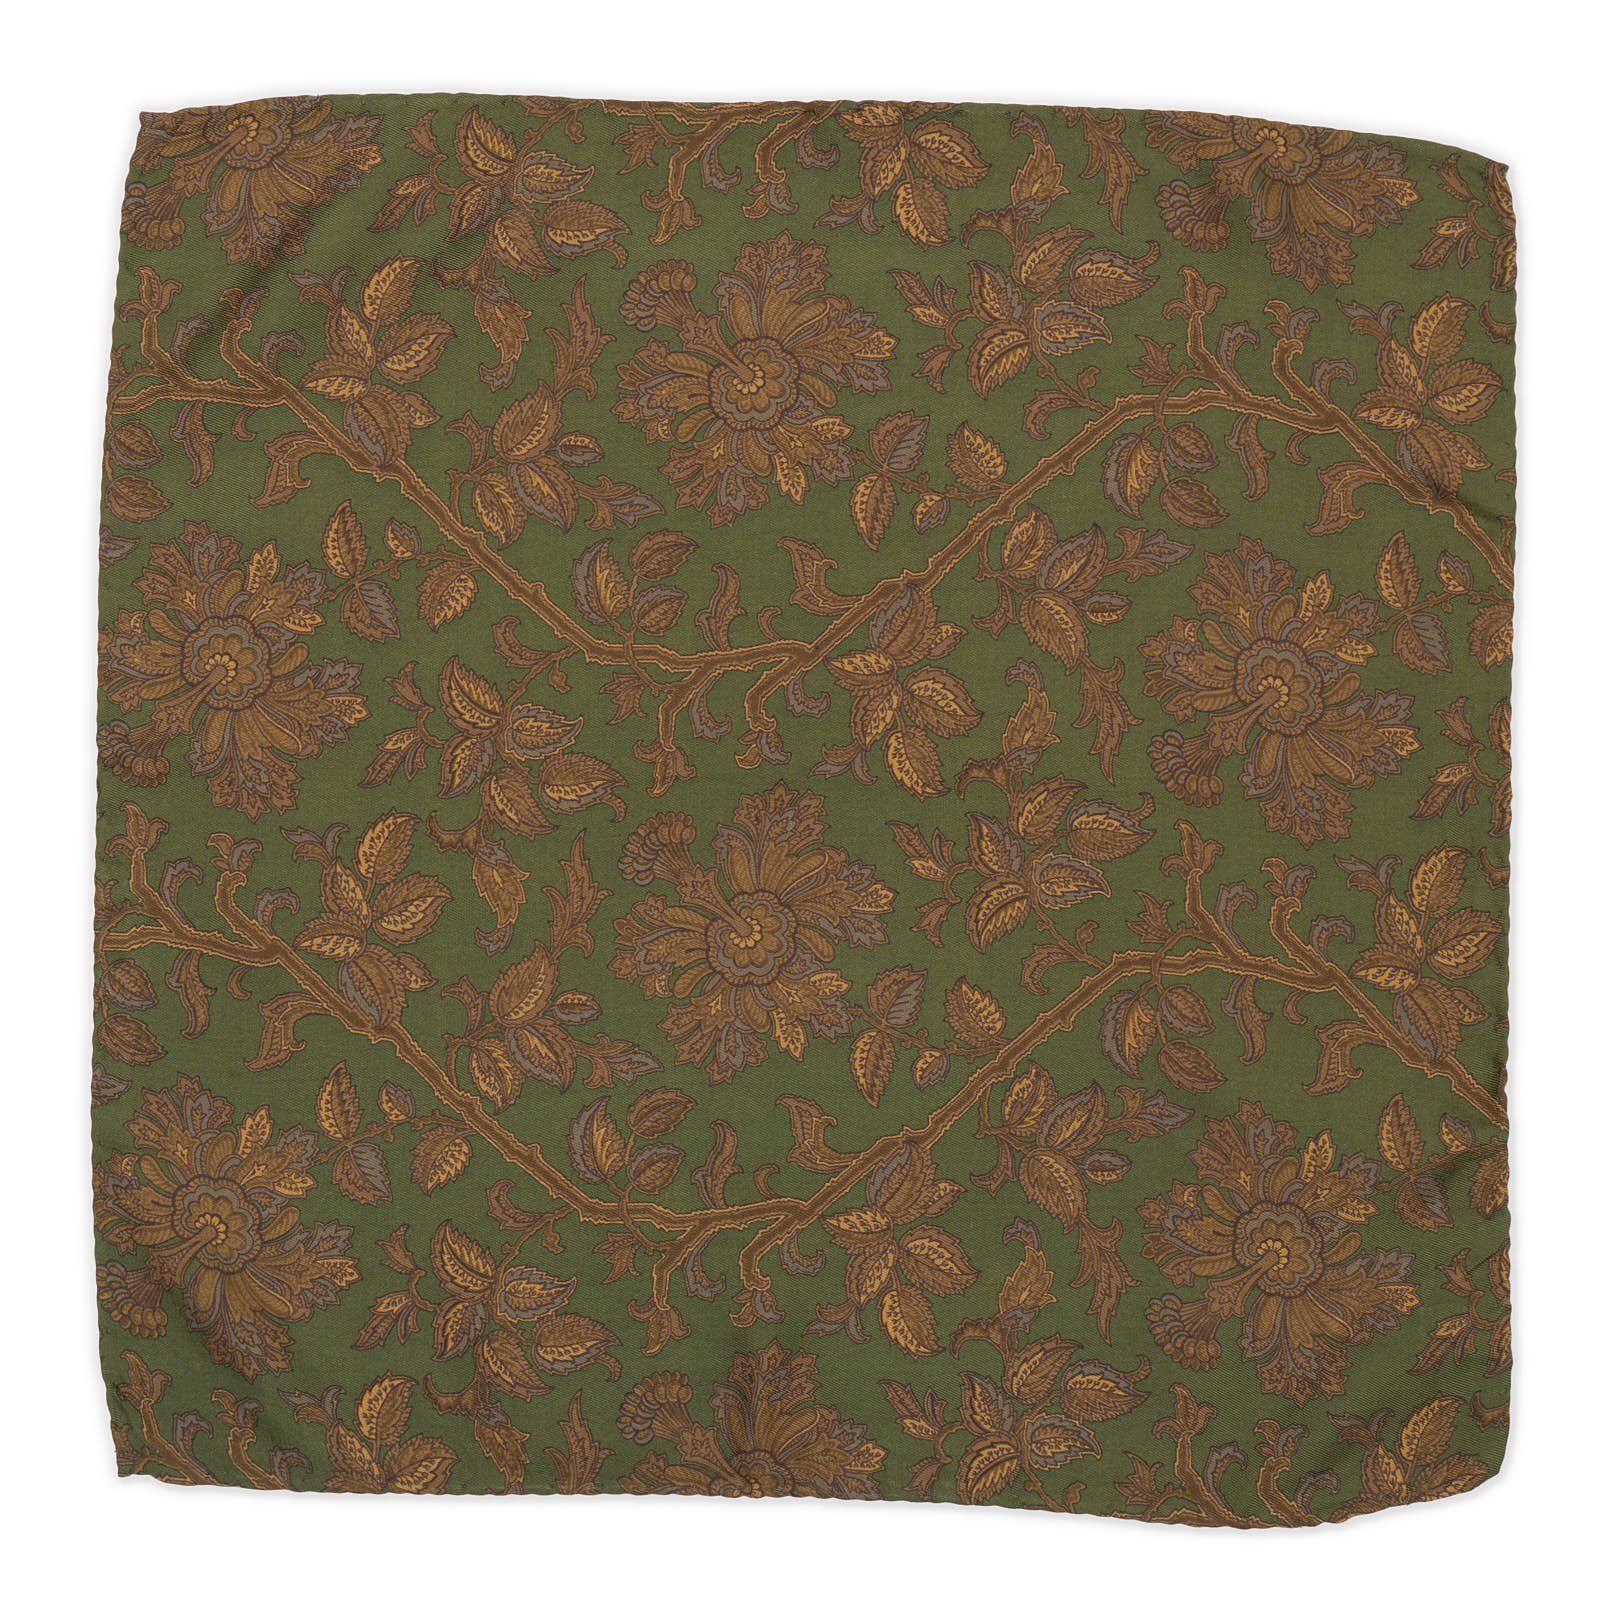 Vintage VANNUCCI Milano Handmade Green-Brown Floral Silk Pocket Square NEW 30cm x 30cm